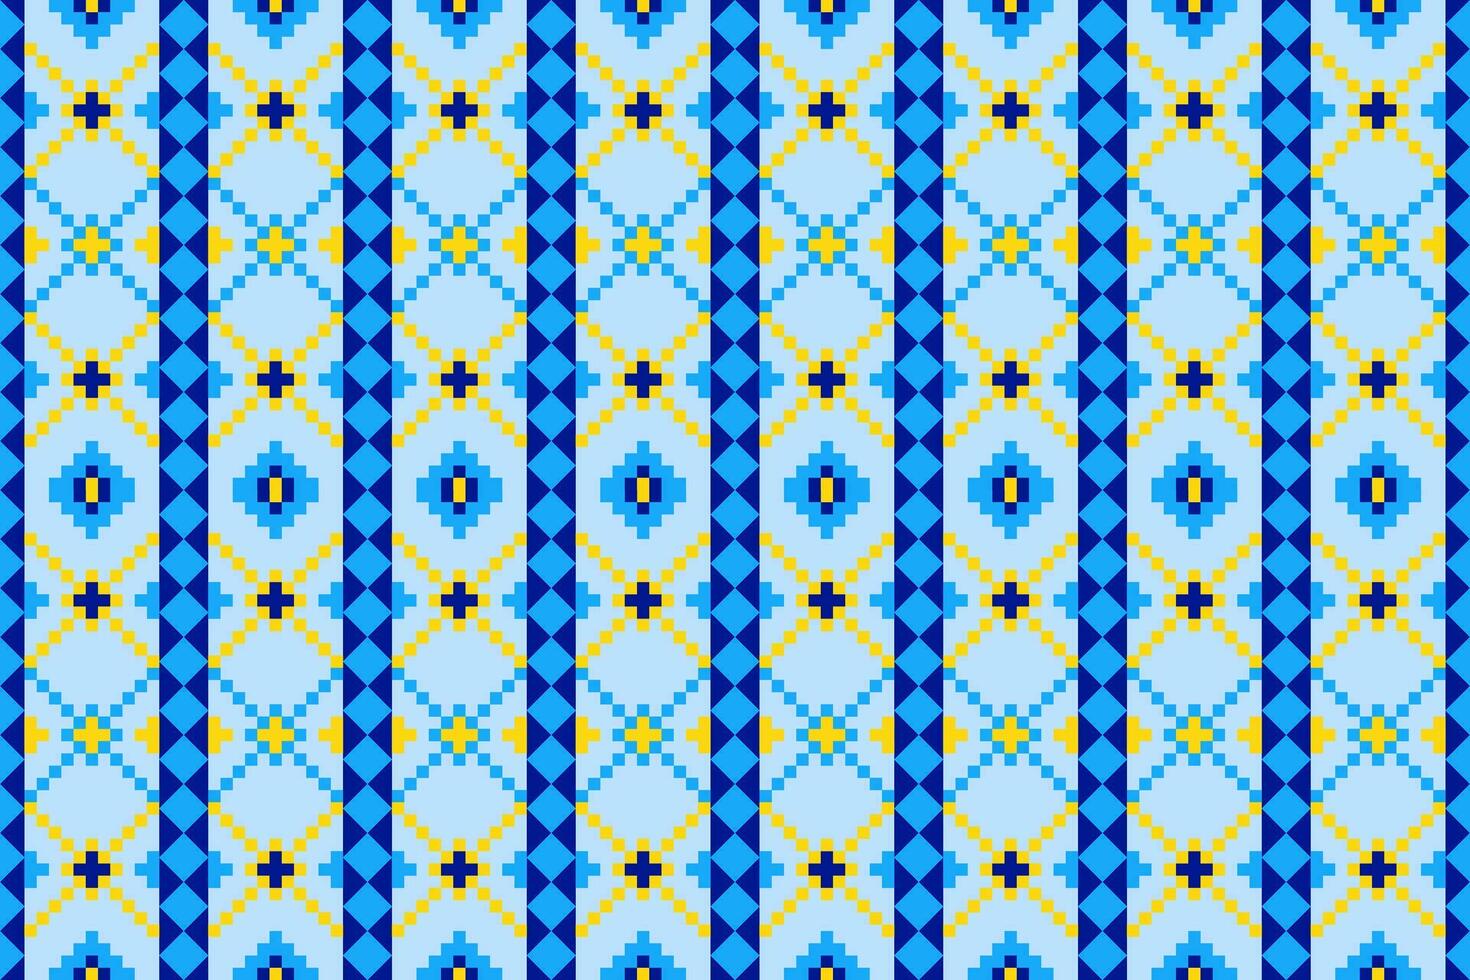 étnico tradicional elegante ornamental multi vistoso geométrico modelo antecedentes diseño frontera textil impresión para textura,tela,ropa,envoltura,alfombra. vector